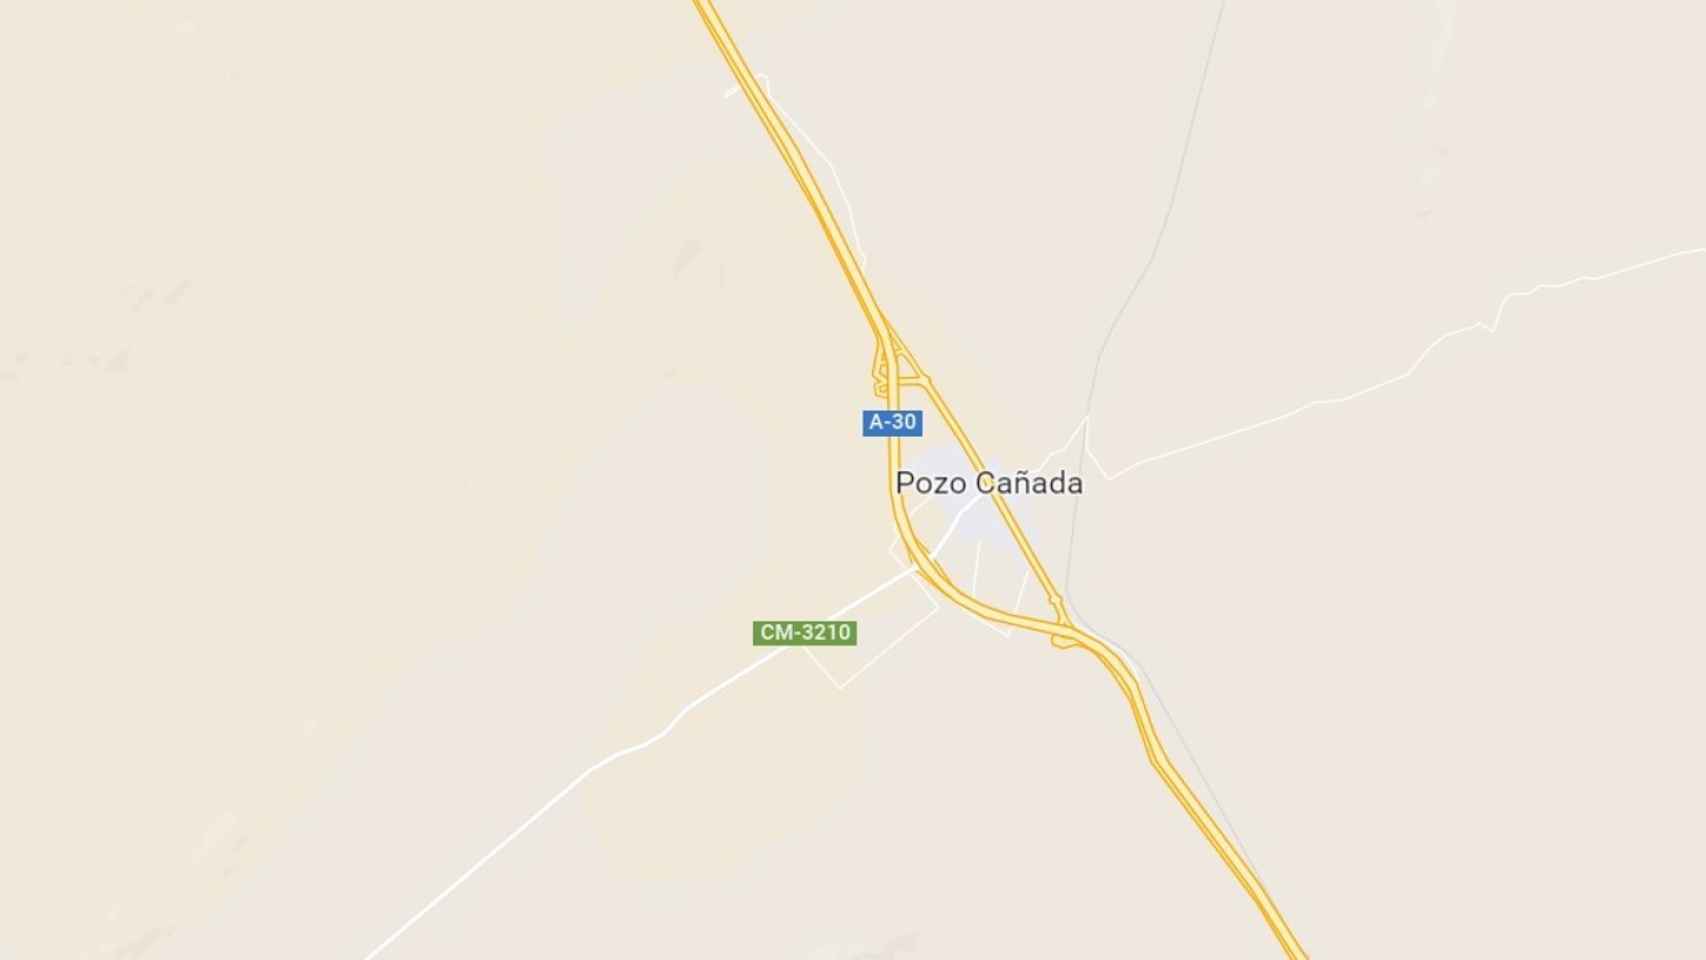 Imagen de Pozo Cañada en Google Maps.